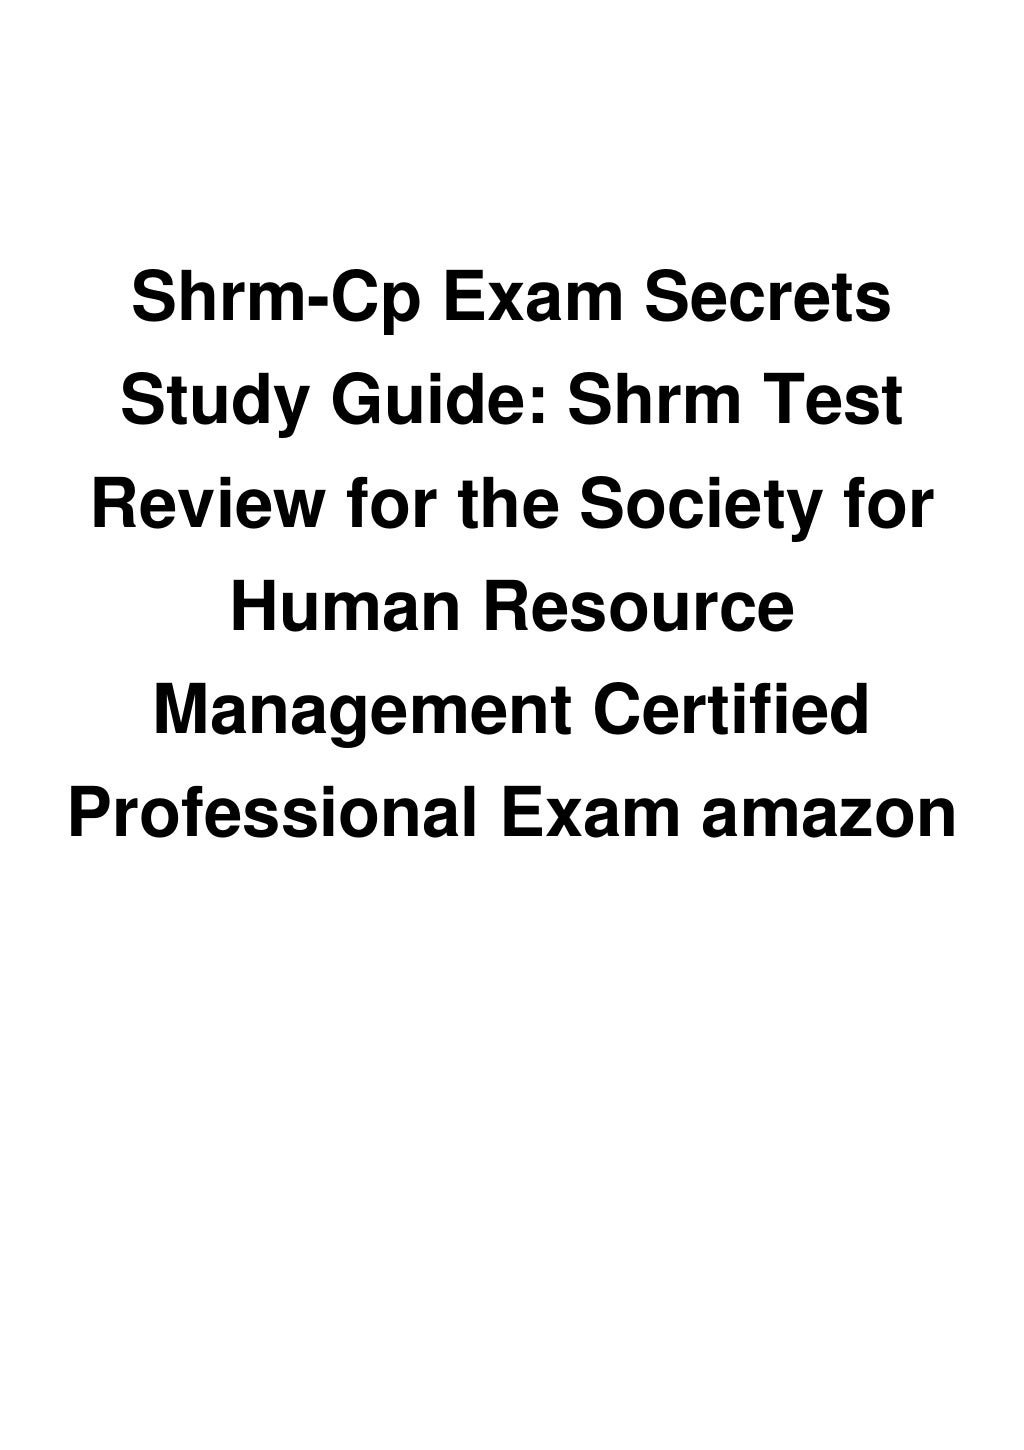 2018-shrm-certification-prep-pdf-study-guide-practice-exam-que